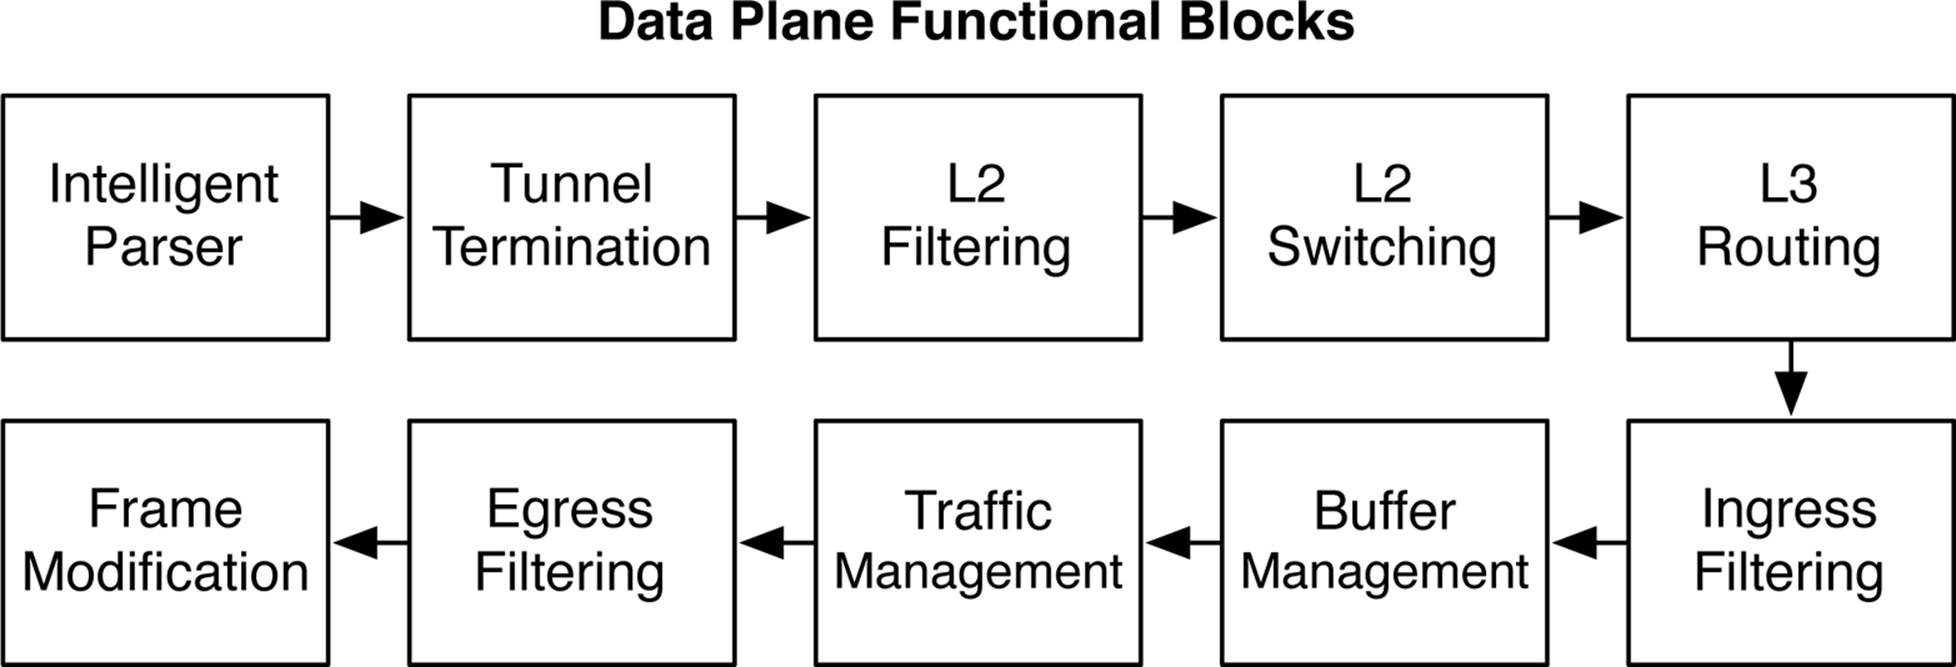 Data plane function blocks